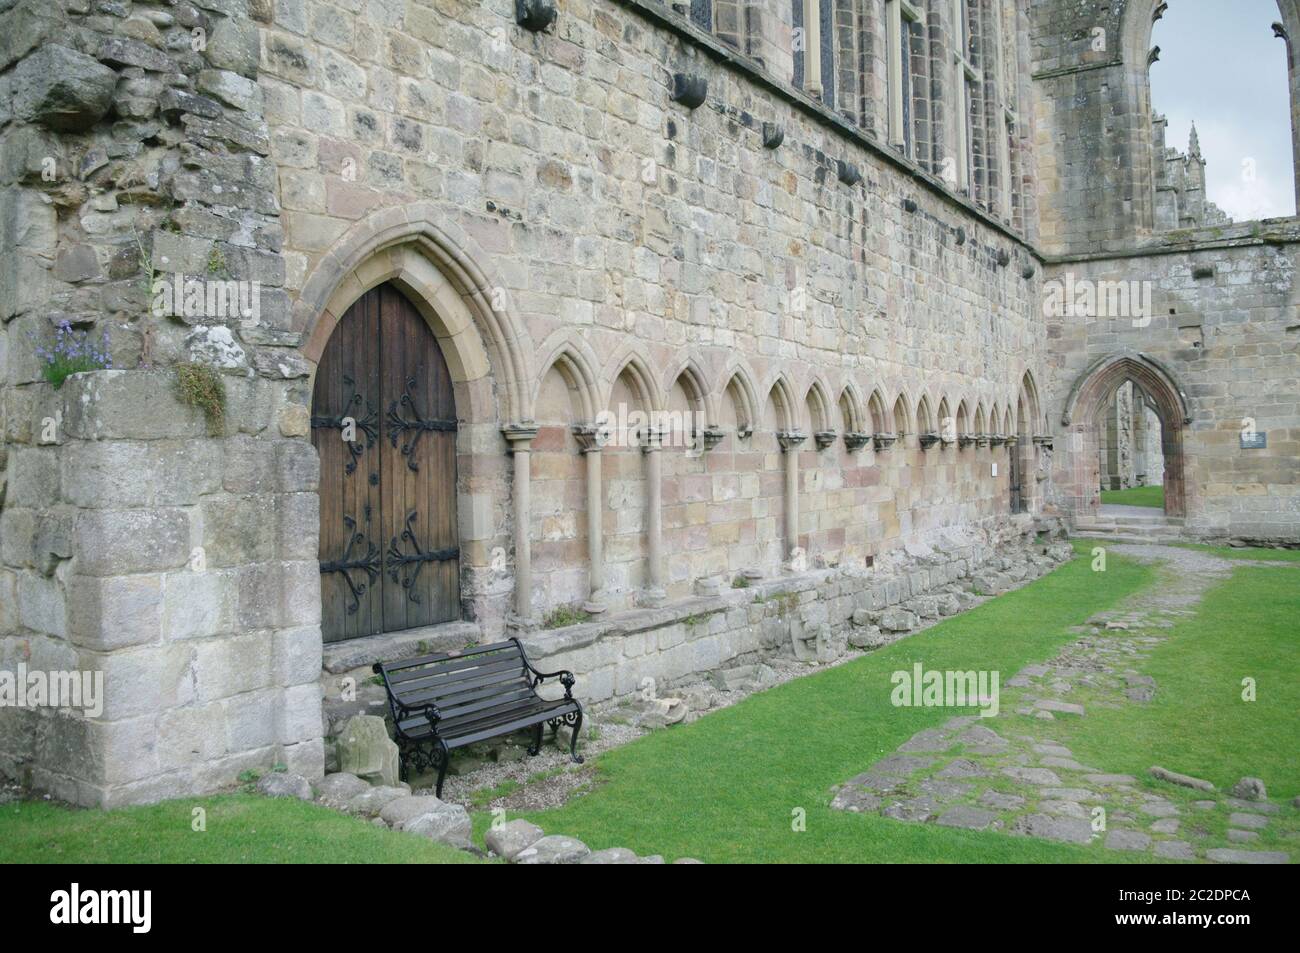 Bolton Abbey, Ruinen, ruinierte Abtei, Bäume, Gras, Tor, Torweg, Bögen, Bank, Abbey Wände Stockfoto